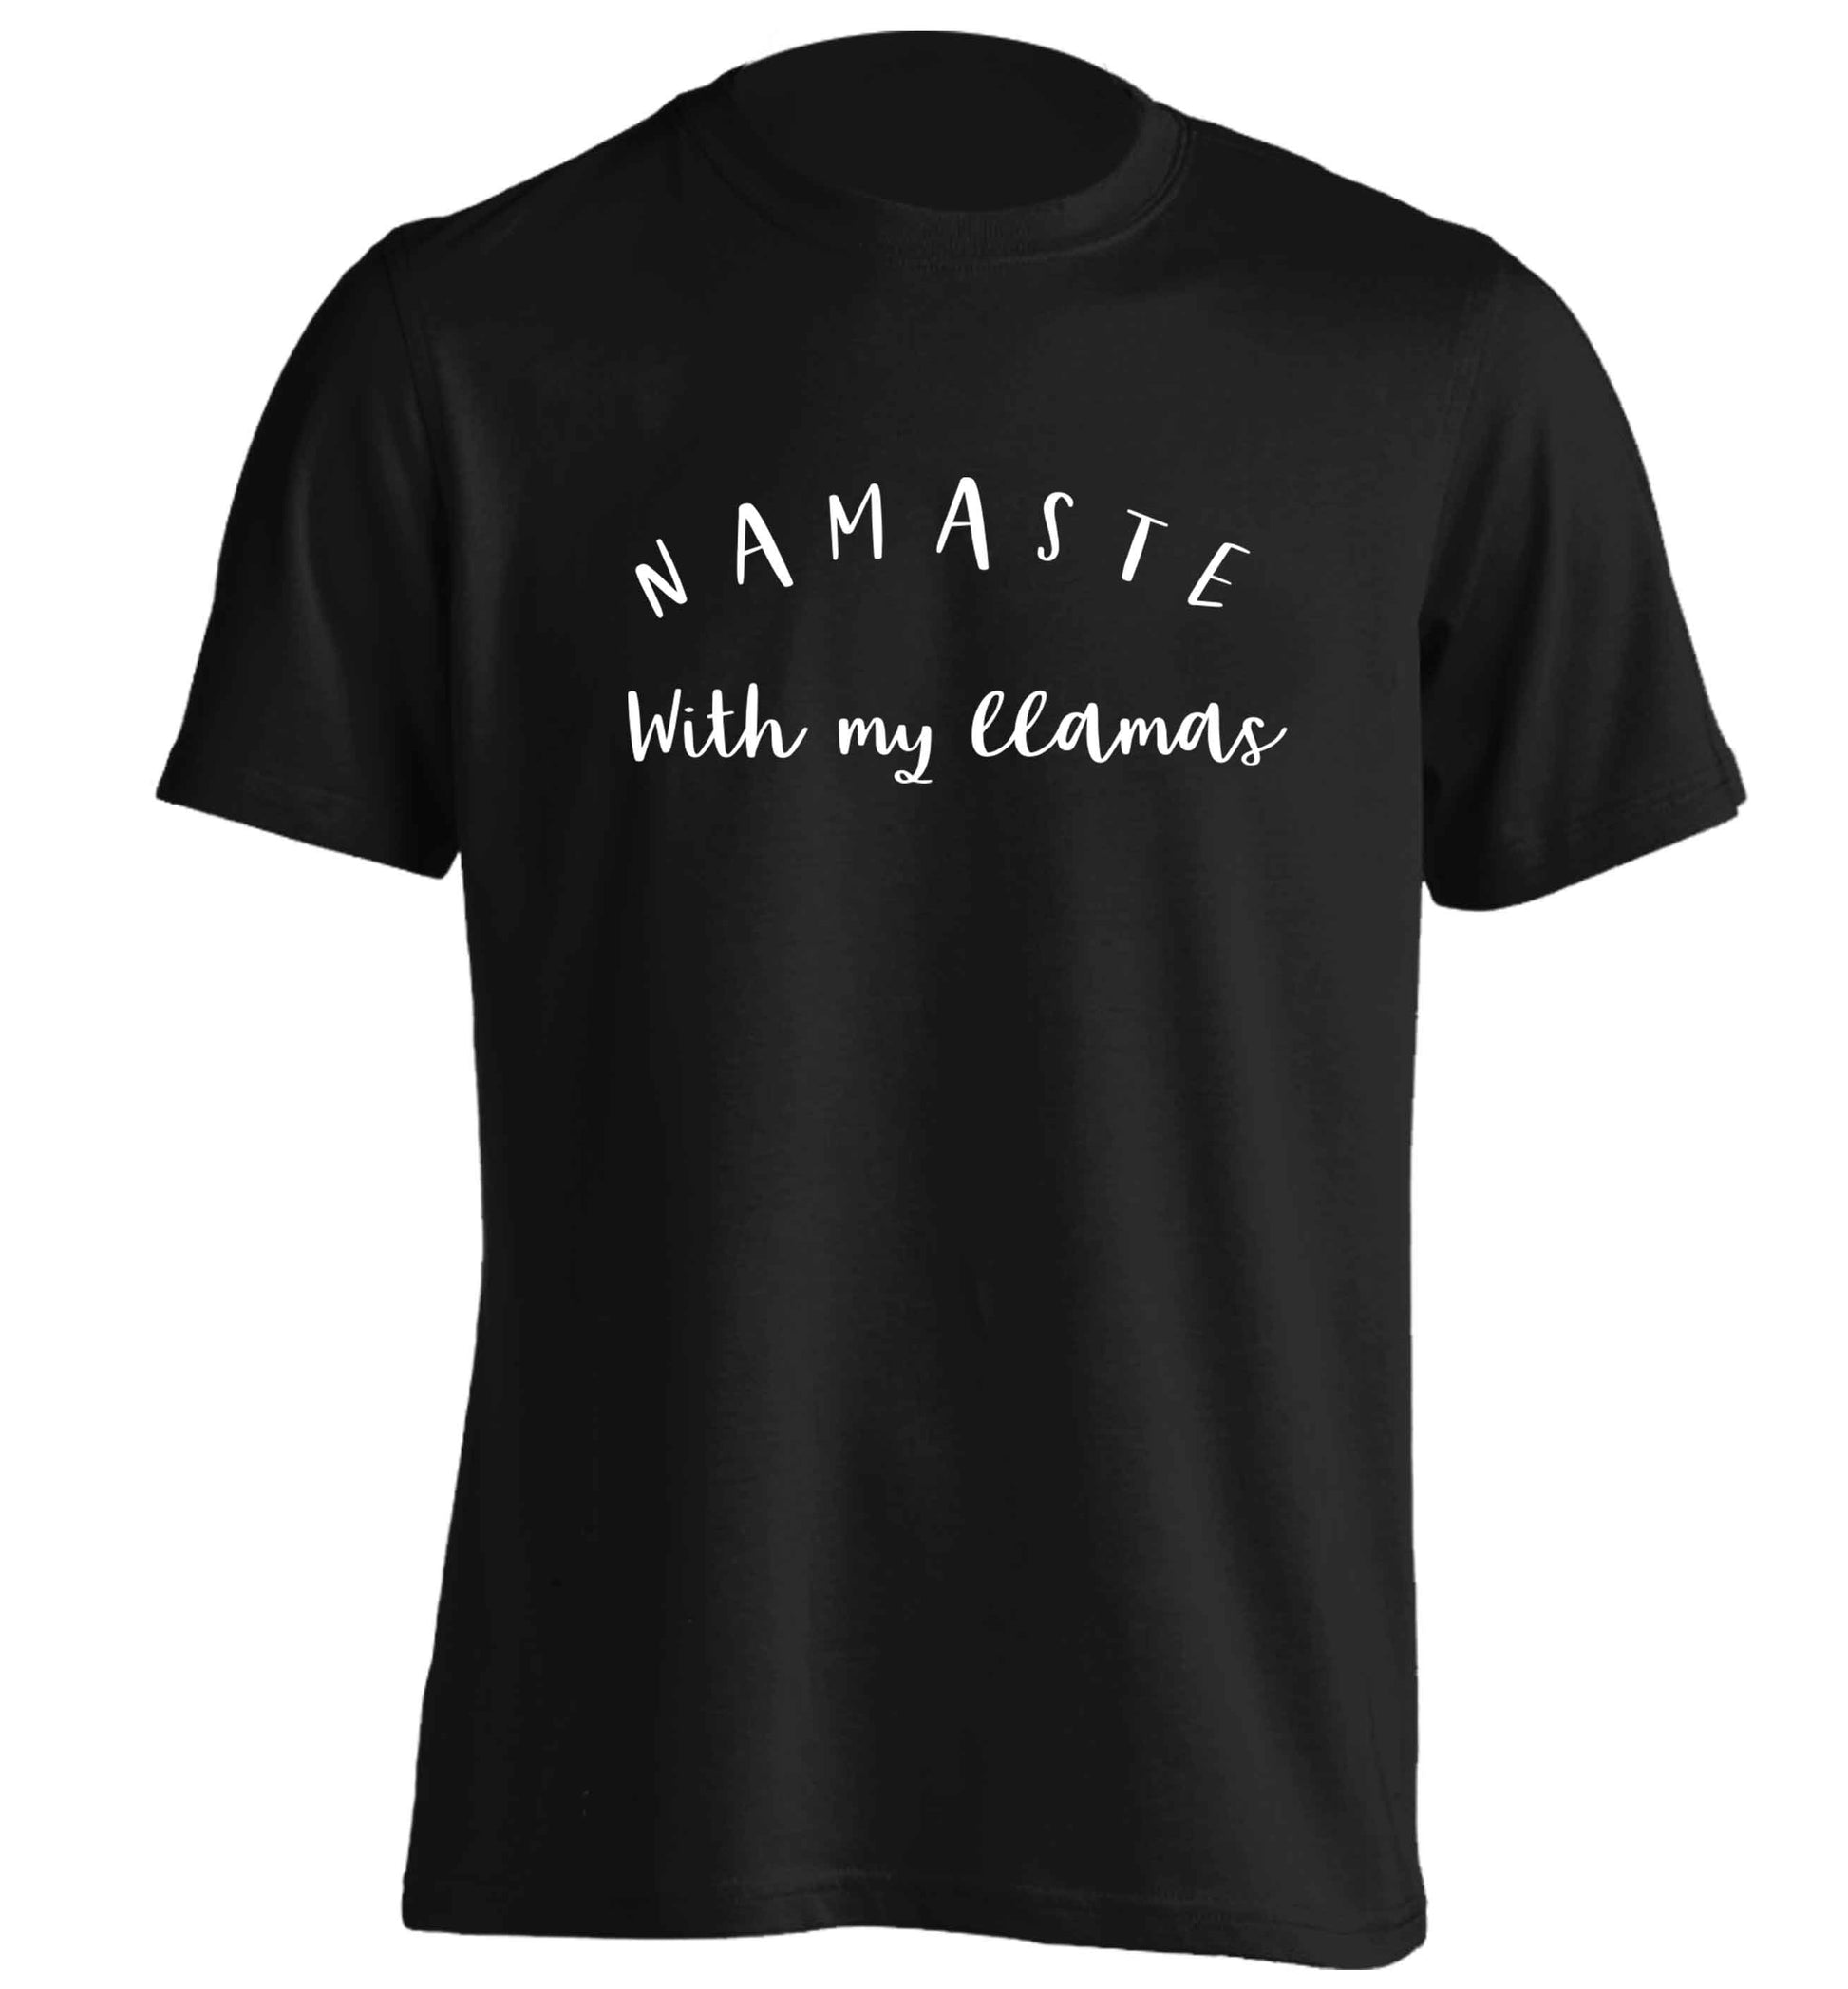 Namaste with my llamas adults unisex black Tshirt 2XL